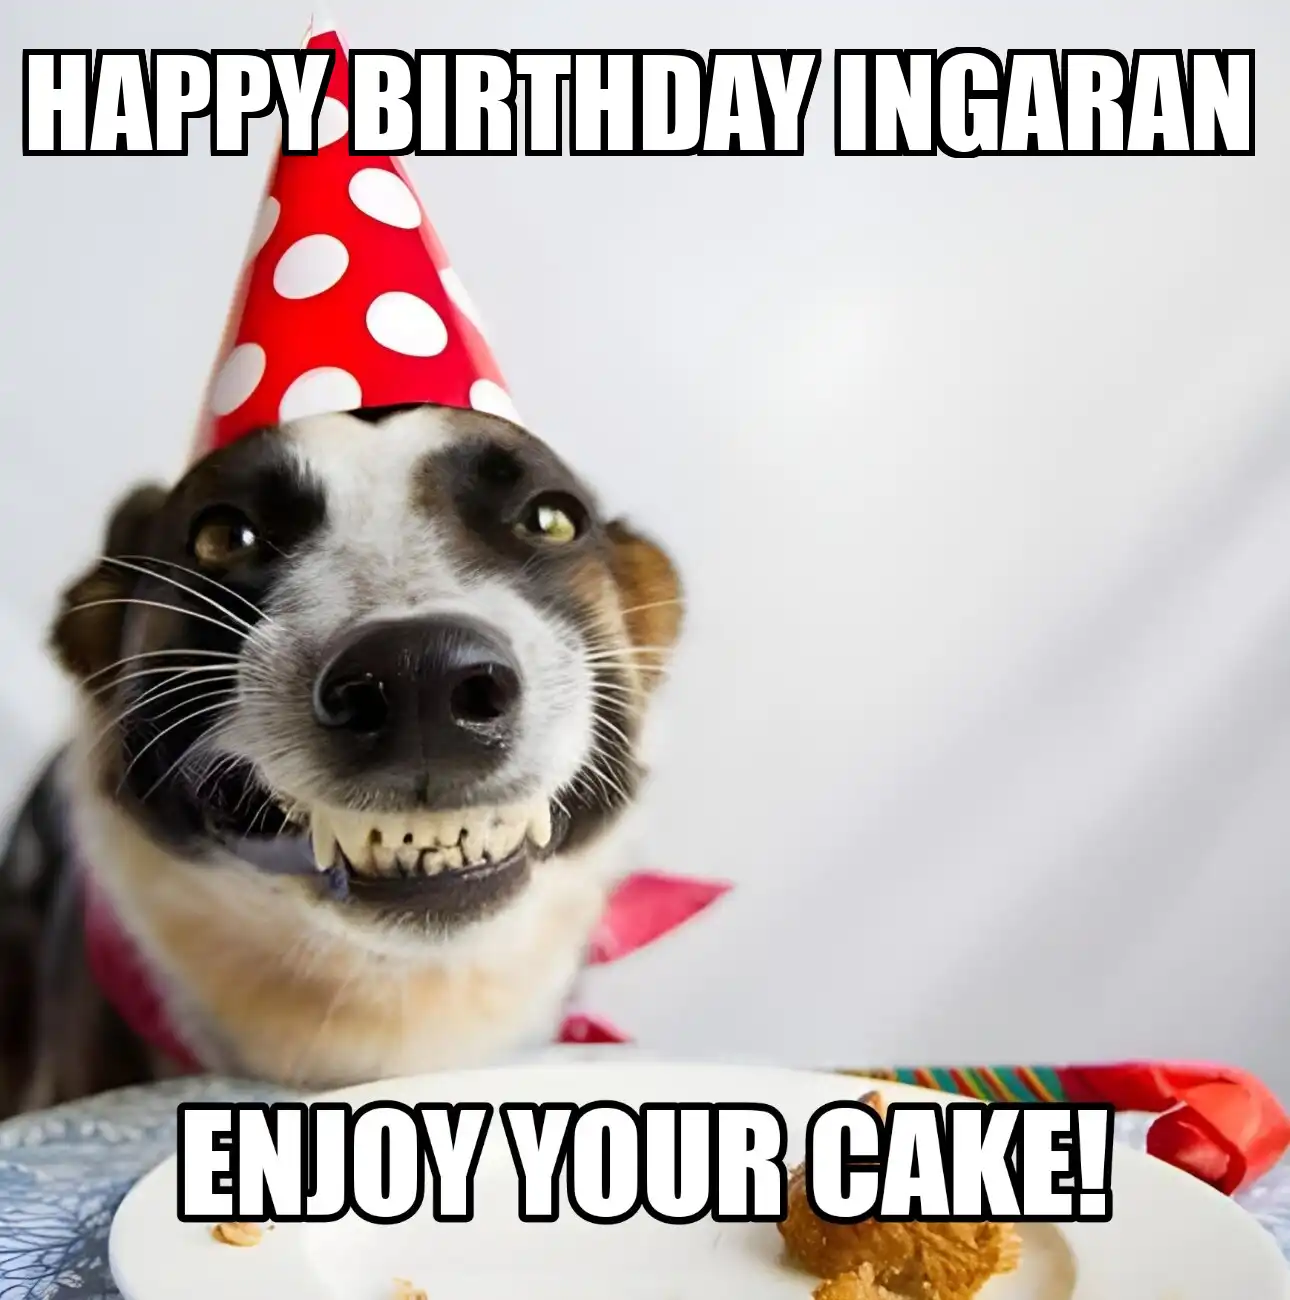 Happy Birthday Ingaran Enjoy Your Cake Dog Meme